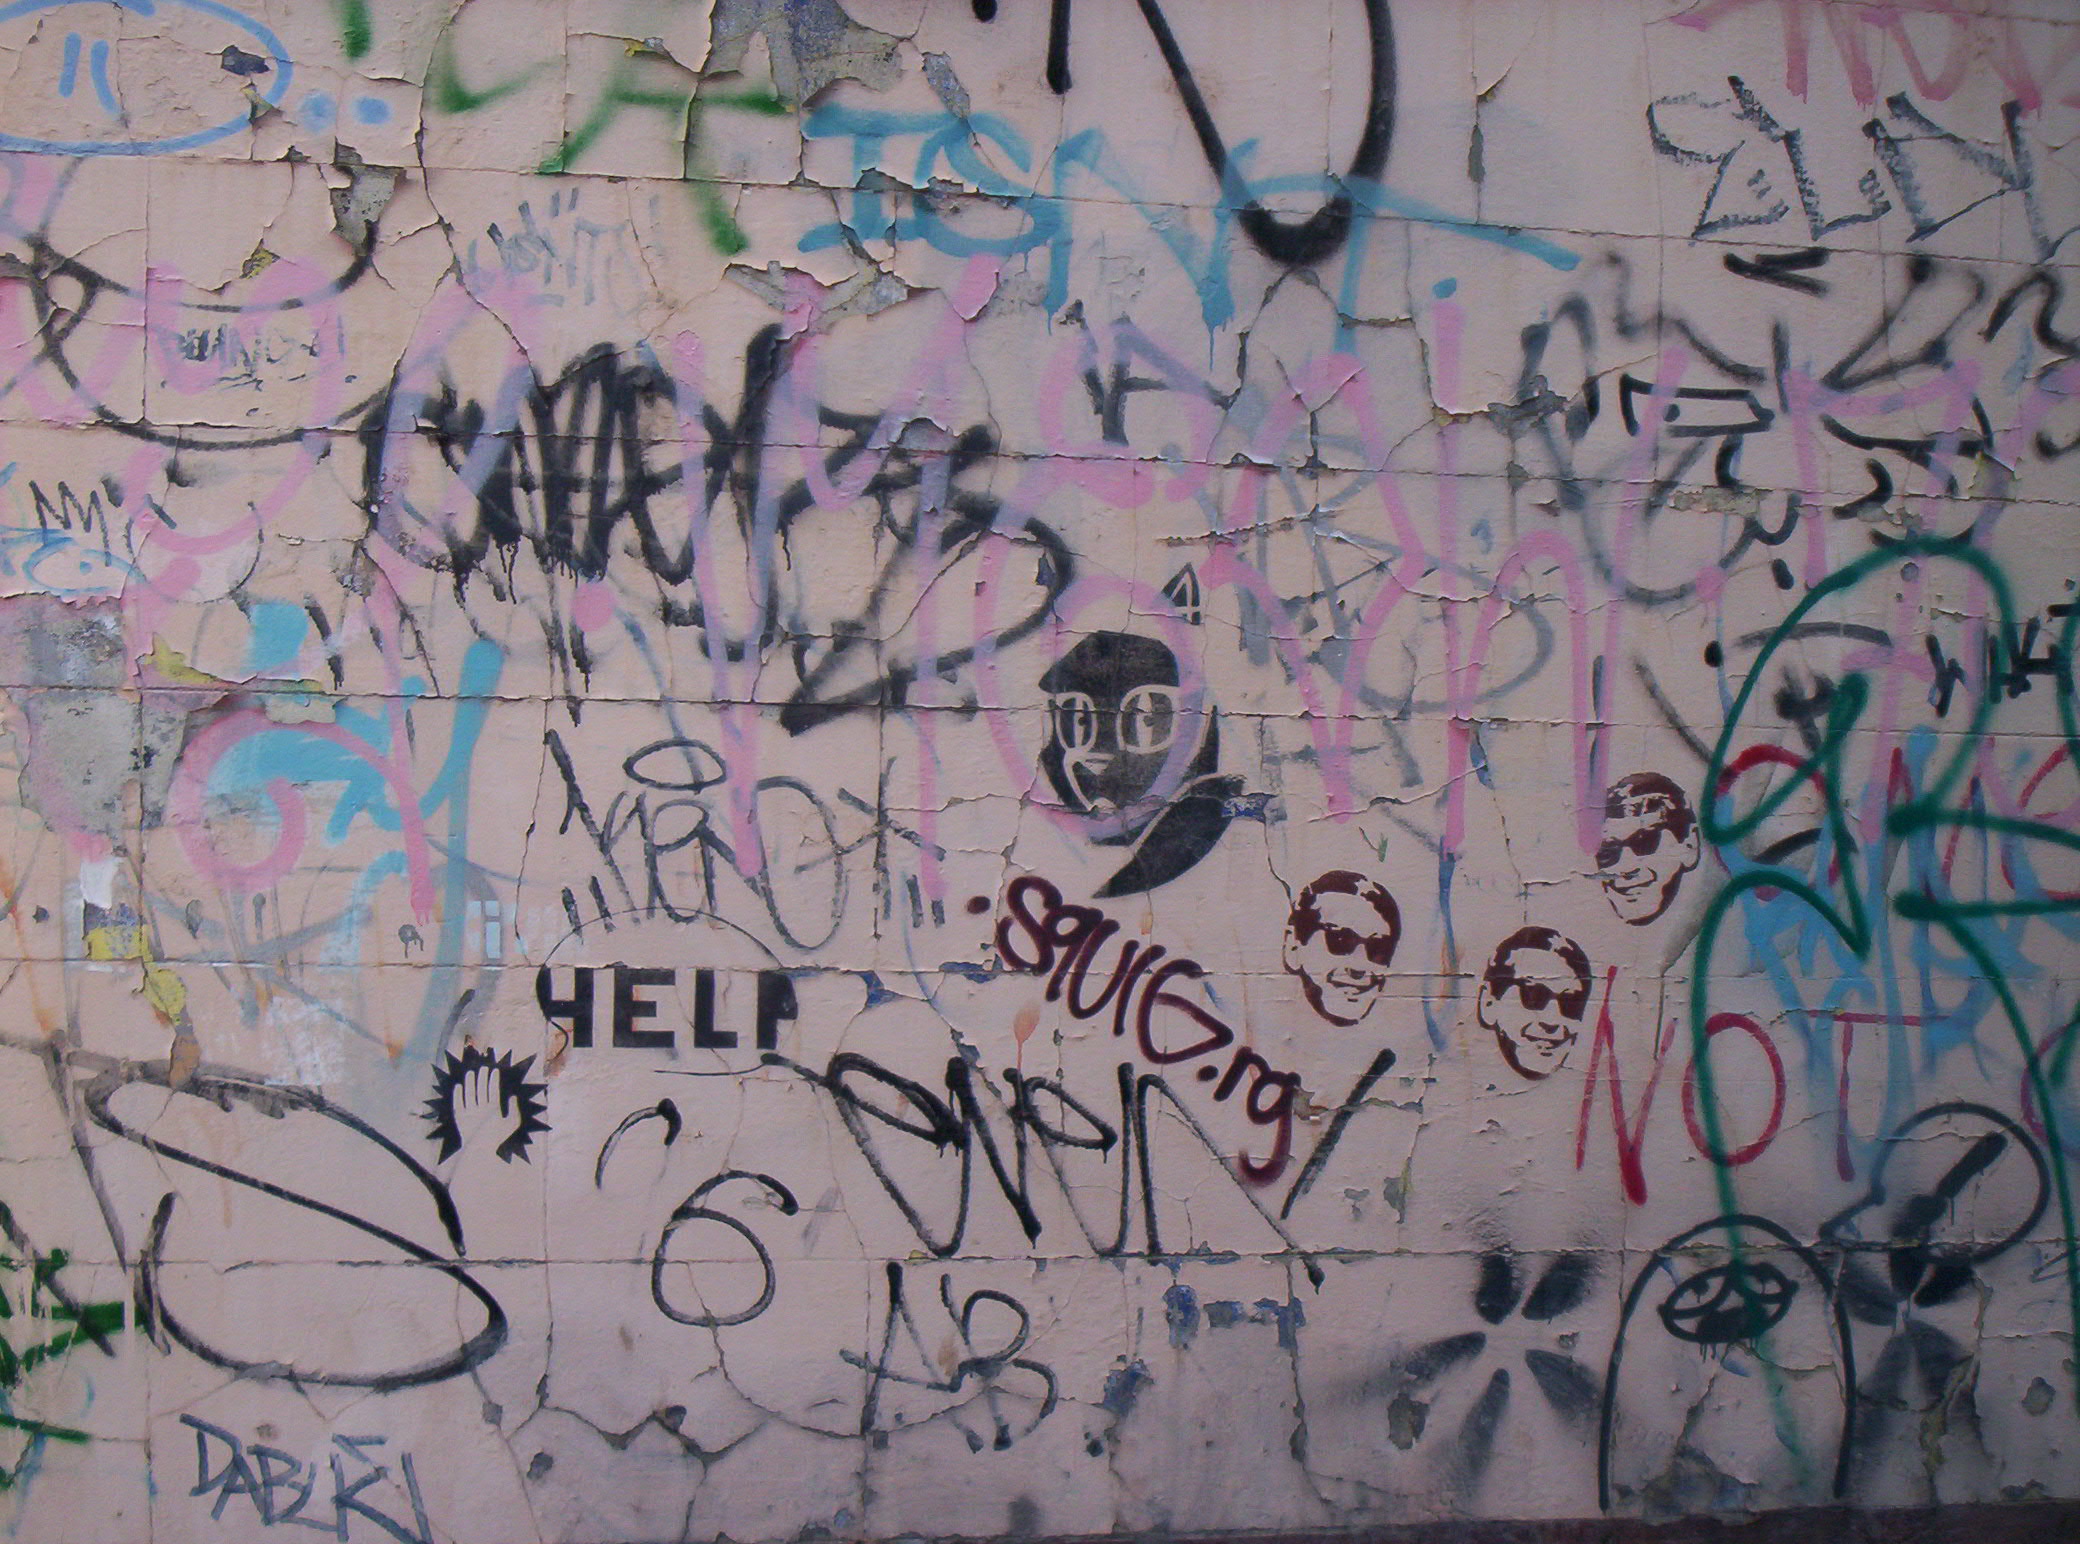 File:Graffiti wall Melbourne 2005.jpg - Wikimedia Commons